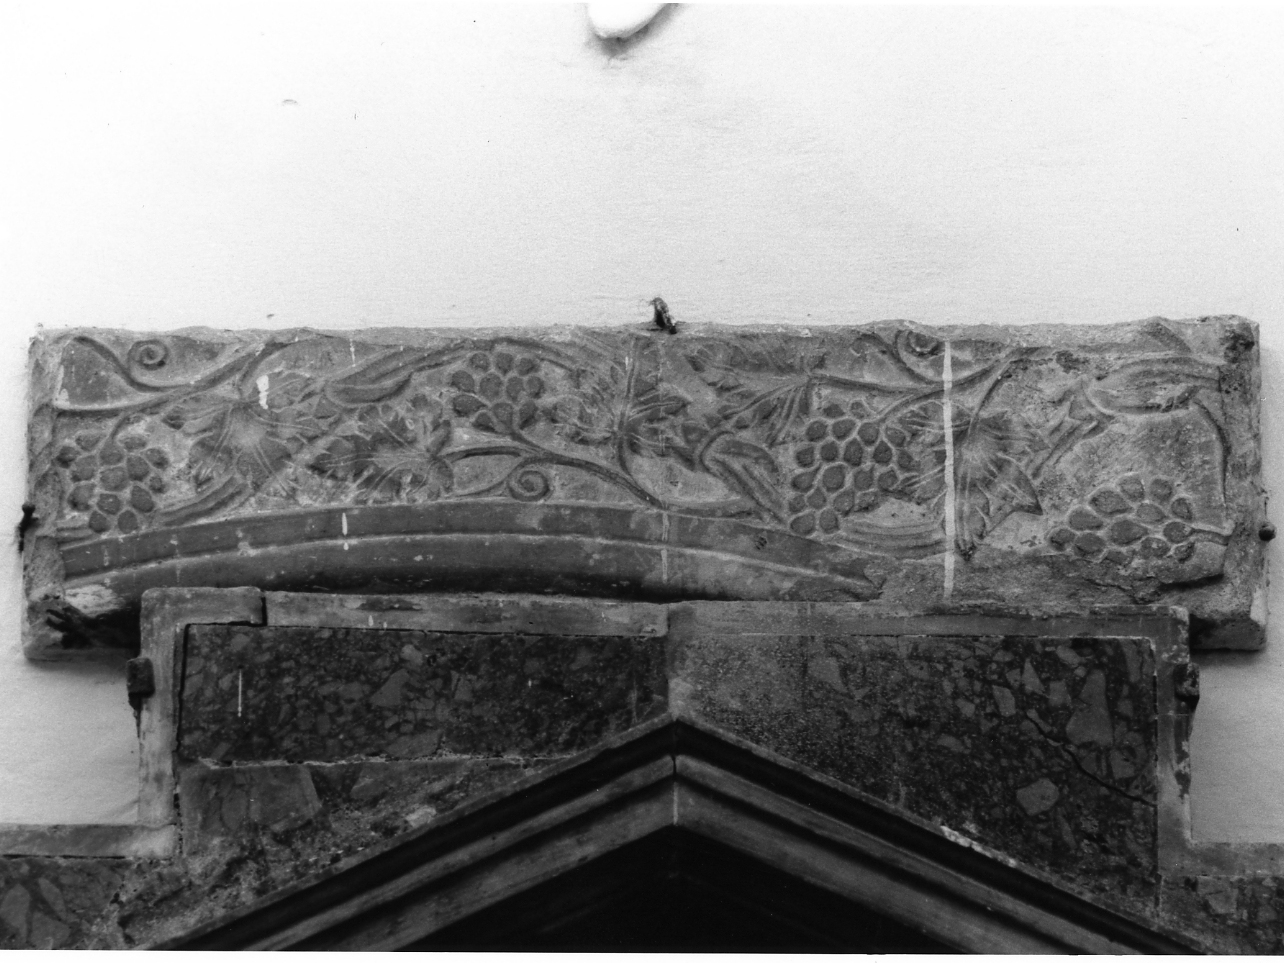 motivi decorativi a tralci di vite (rilievo, frammento) - bottega napoletana (metà sec. XIII)